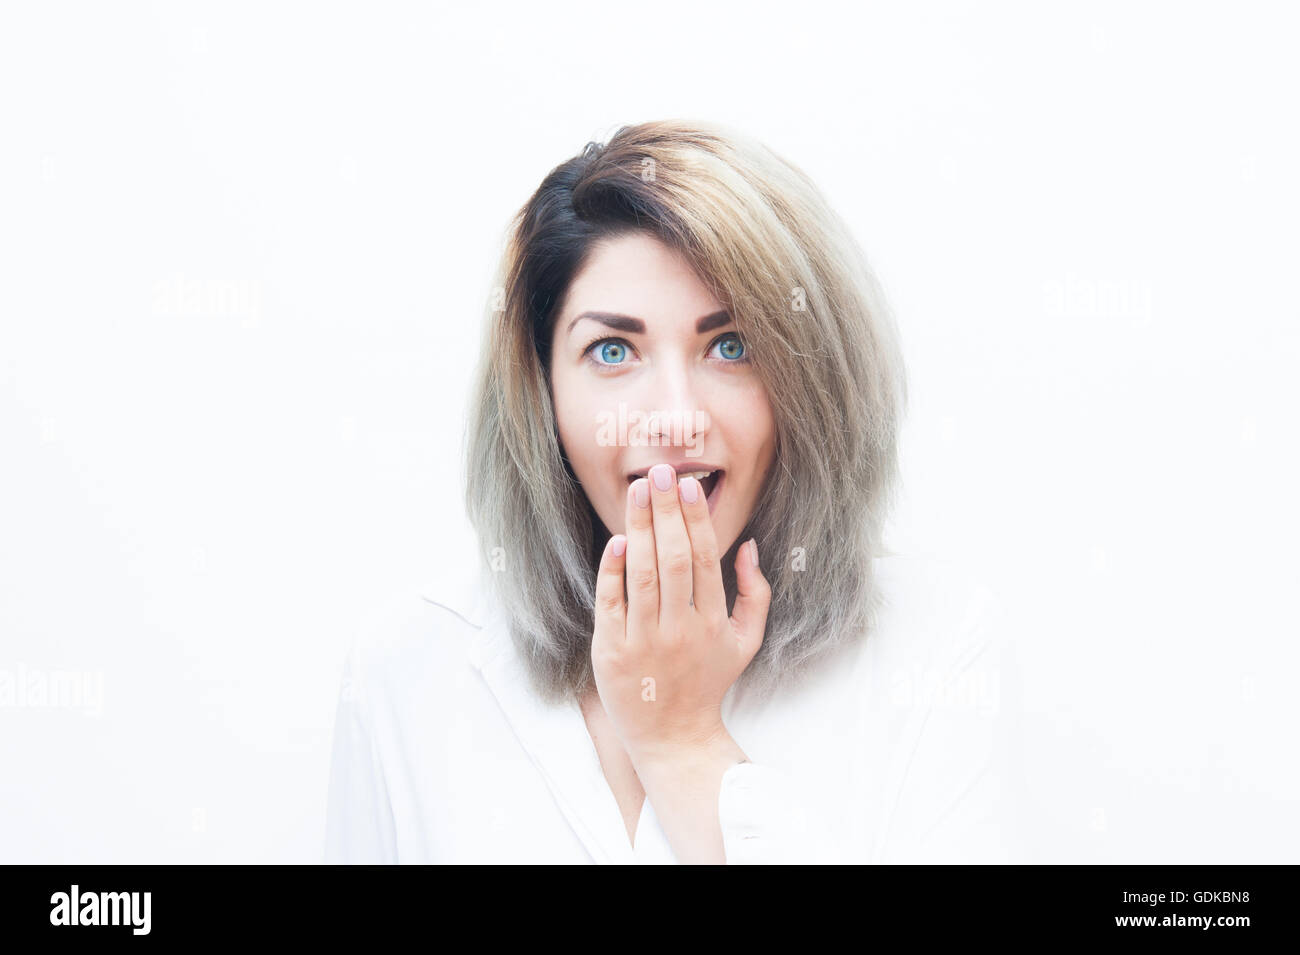 Young blue eyes blonde woman amazed expression isolated on white portrait Stock Photo